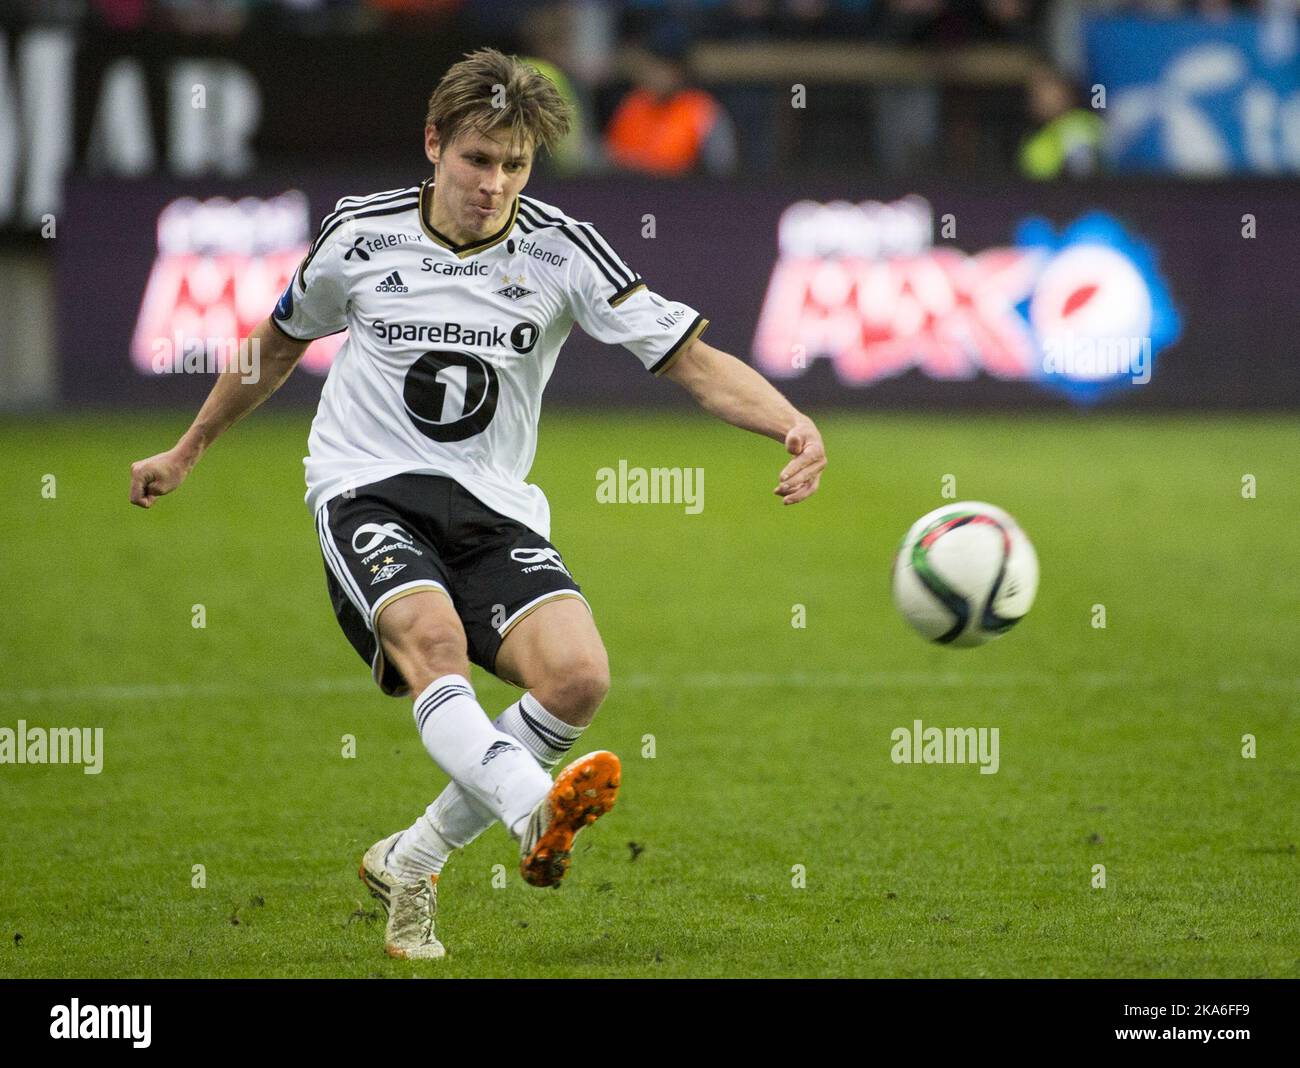 Riku Riski Olavi in league match between Rosenborg and AFK at Lerkendal stadium . Stock Photo